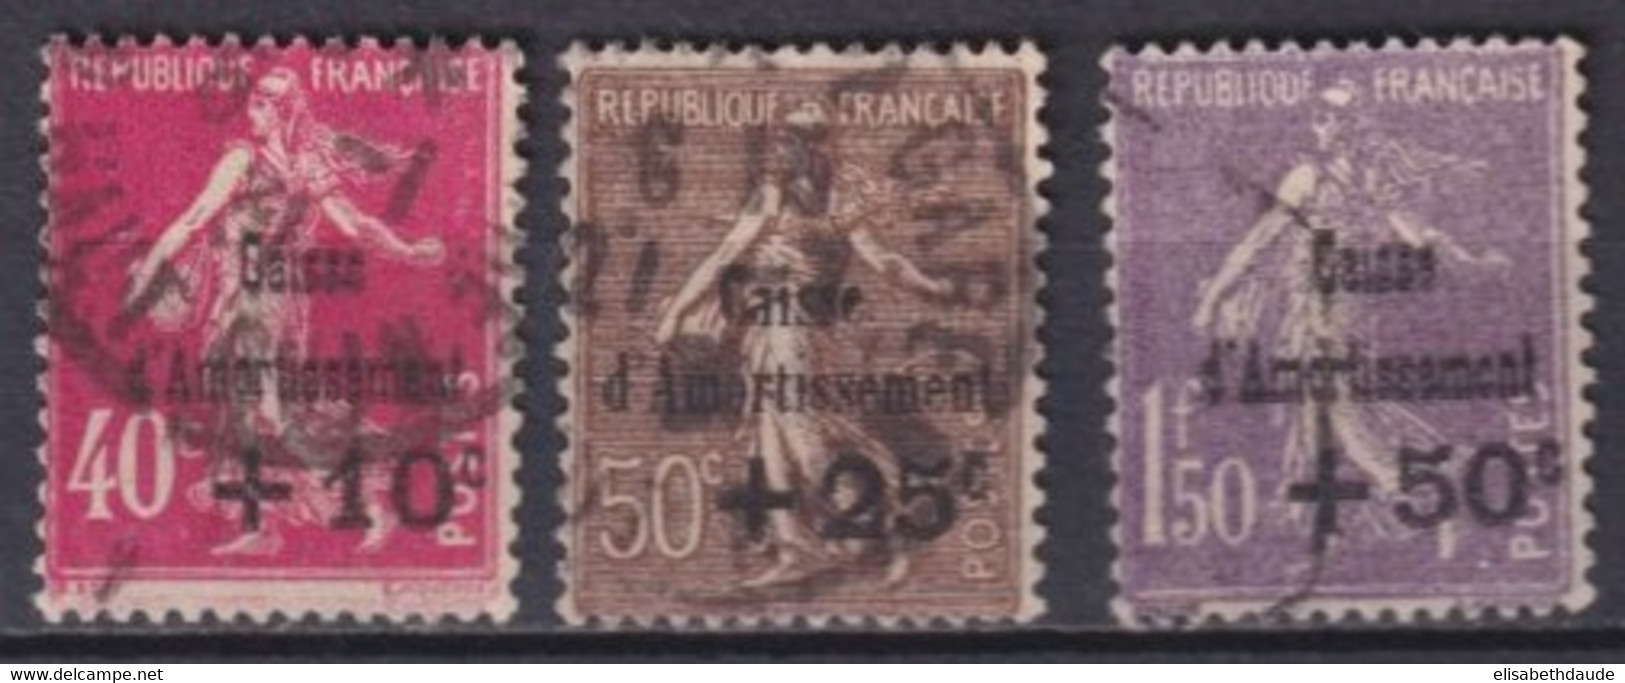 1930 - SERIE COMPLETE YVERT N° 266/268 OBLITERES  - COTE = 145 EUR. - SEMEUSE CAISSE D'AMORTISSEMENT - 1927-31 Caisse D'Amortissement